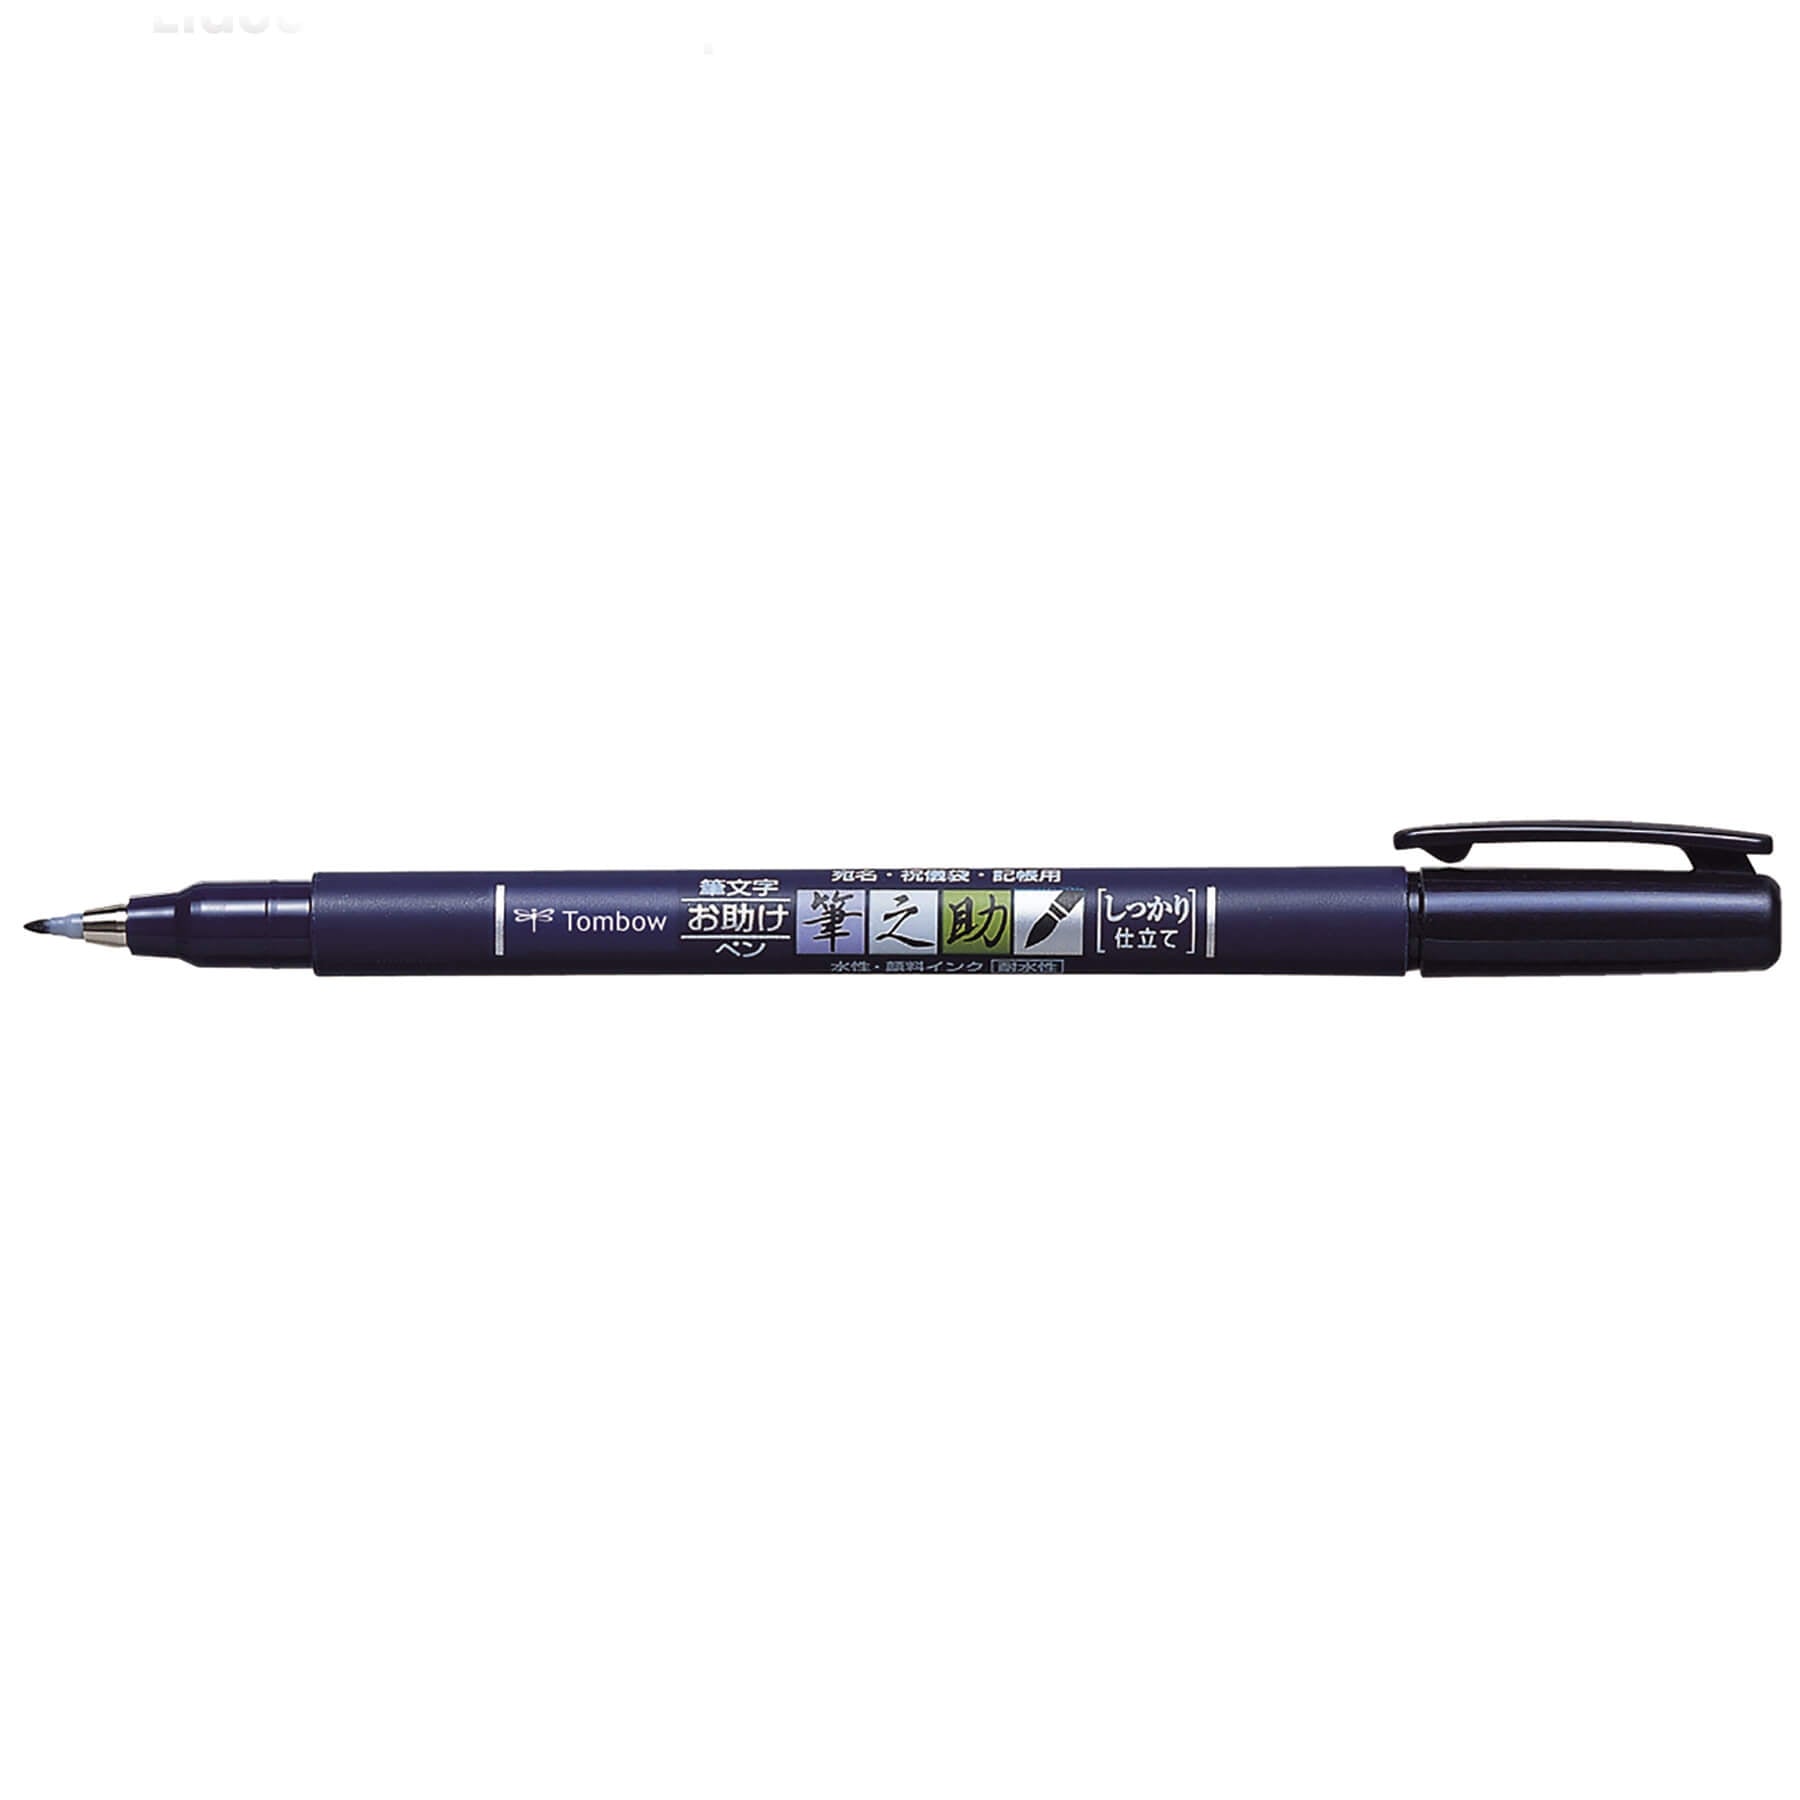 Tombow Fudenosuke Hard Brush Pen Black with open tip / without cap